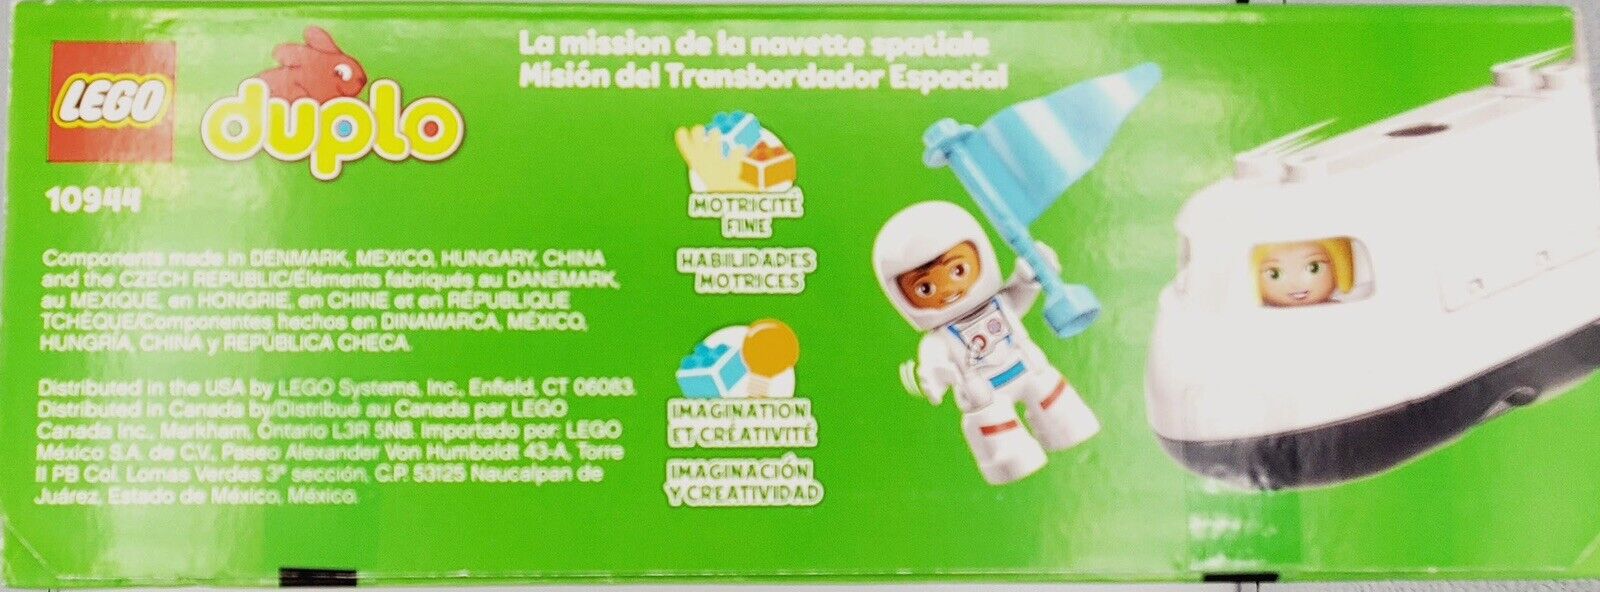 online Shuttle sale | (10944) Mission Space for DUPLO: eBay LEGO